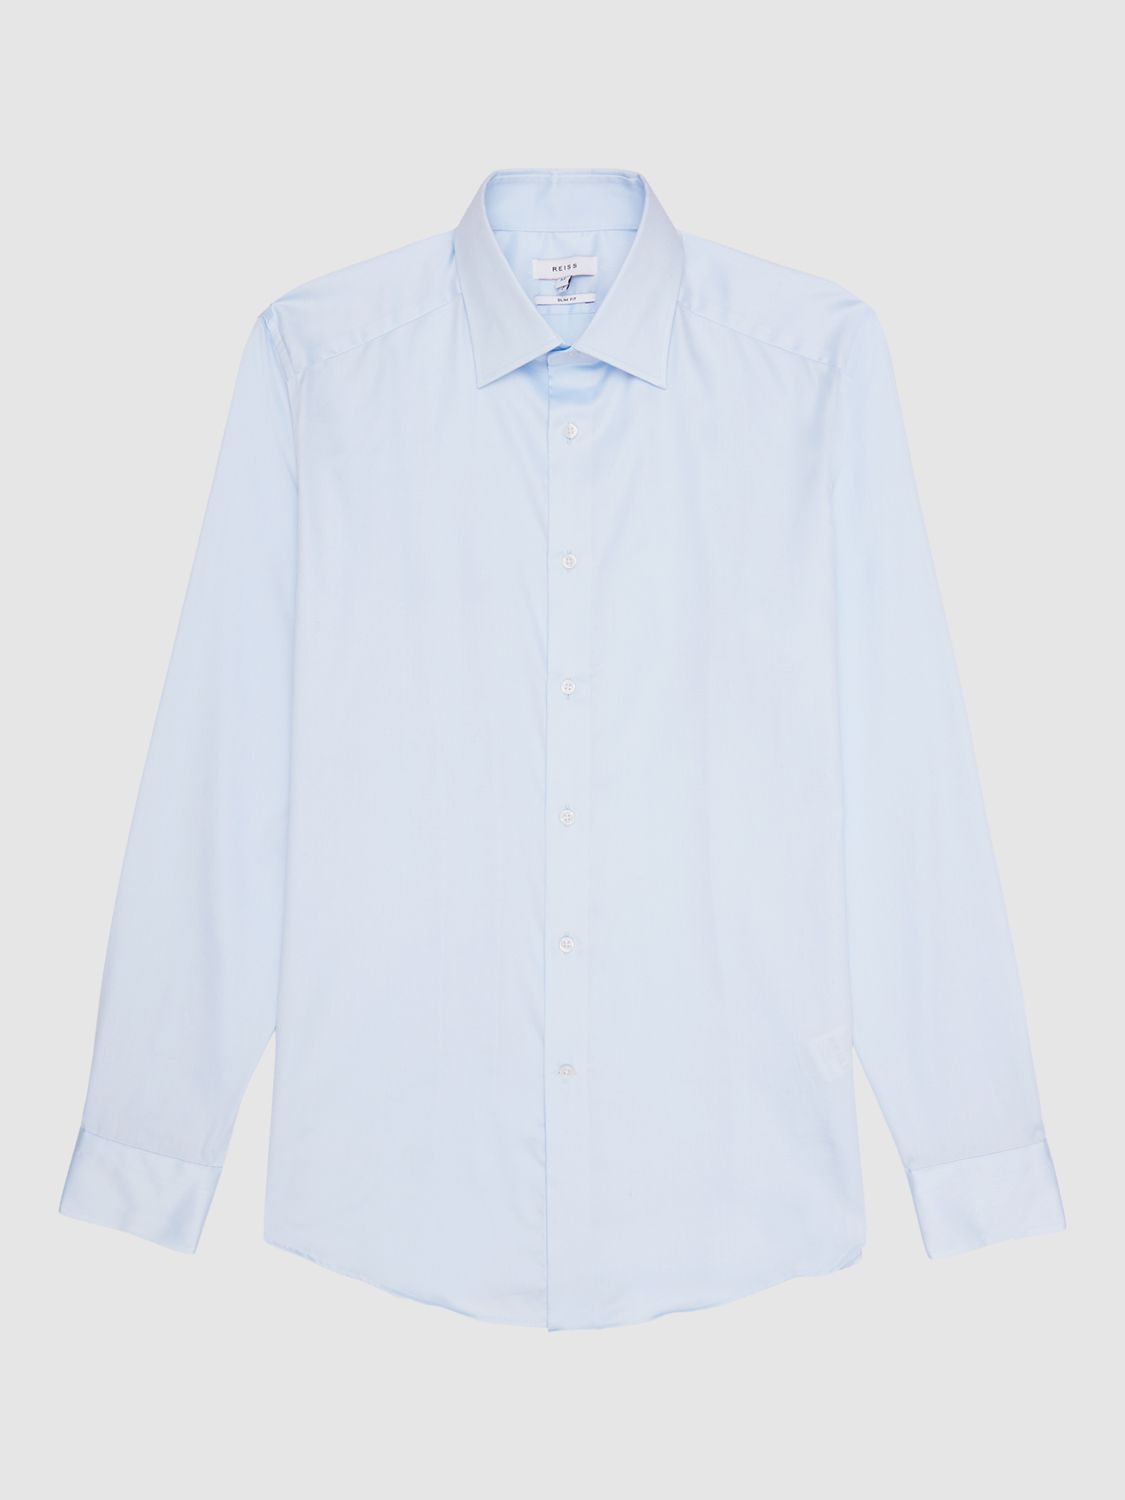 Reiss Frontier Stretch Satin Cotton Slim Fit Shirt, Blue, S